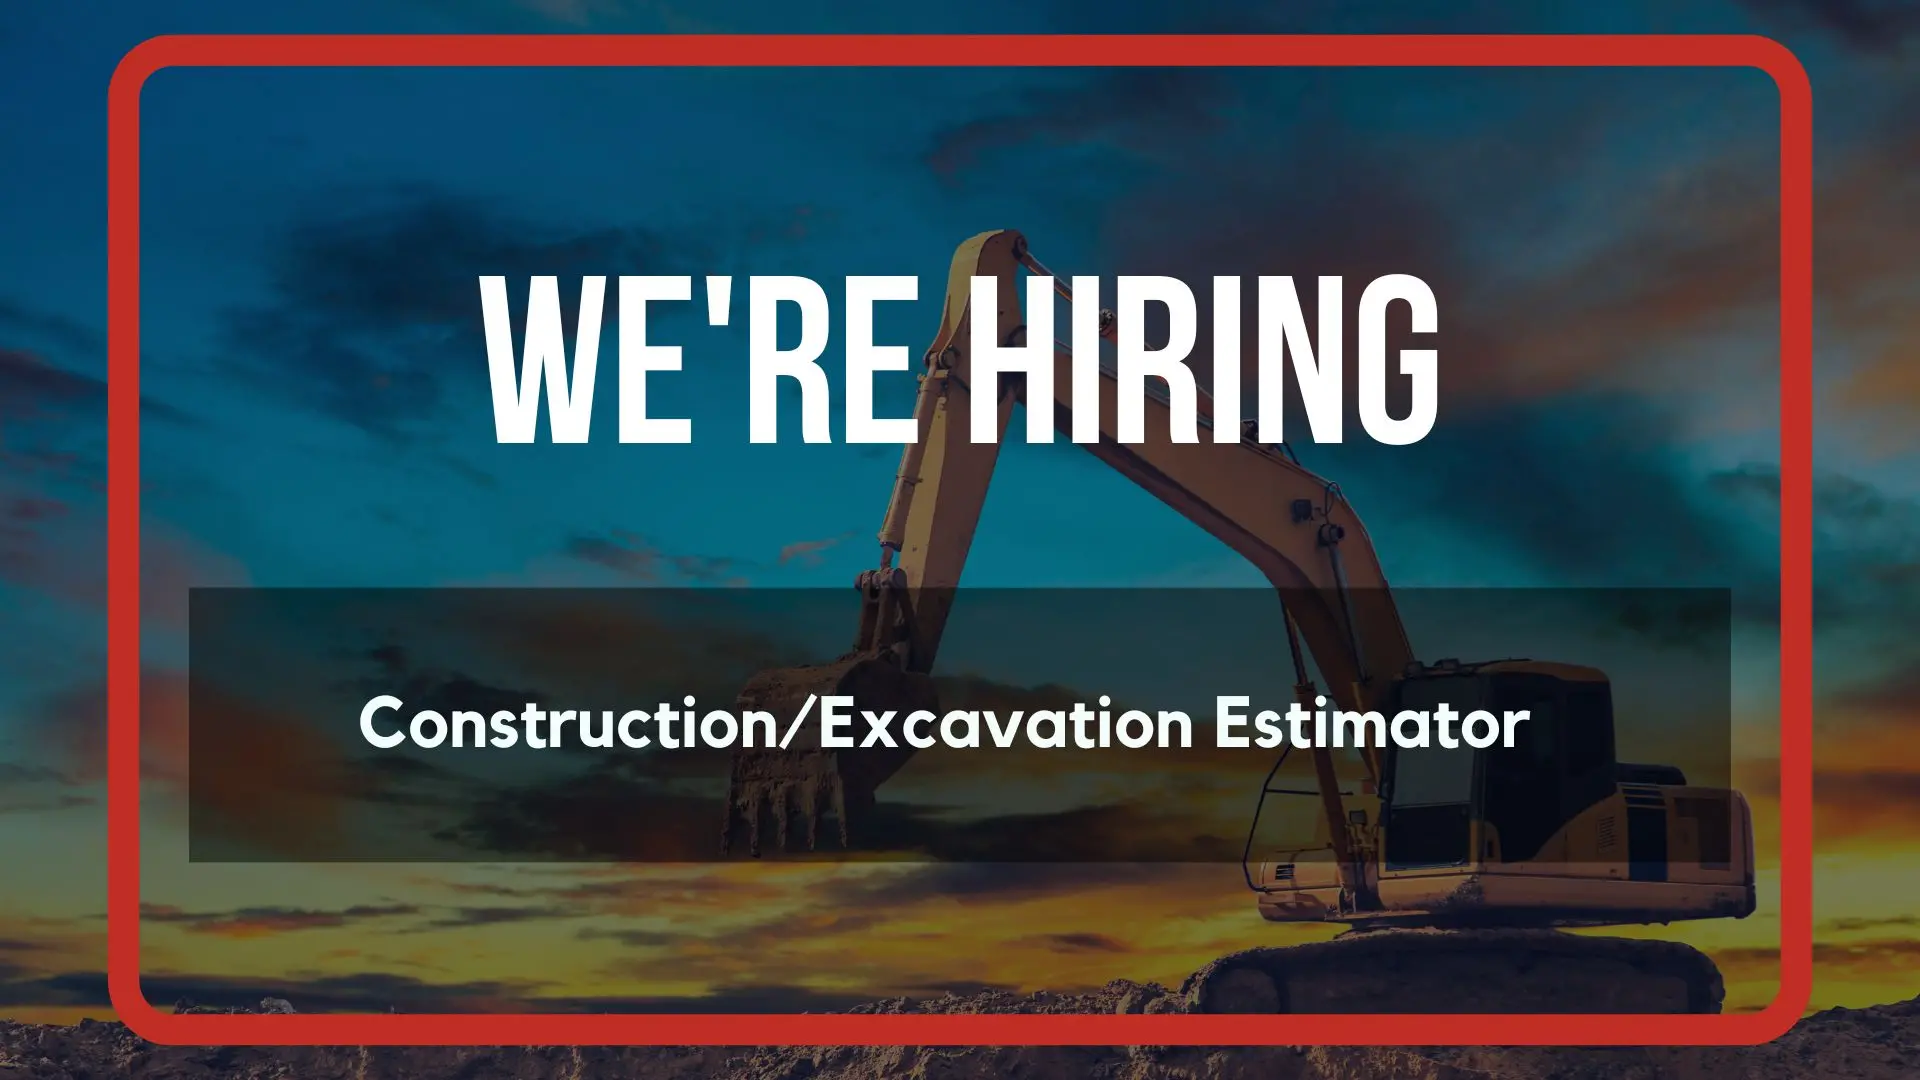 Join Our Team: Construction/Excavation Estimator Position Open at CK Contractors LLC